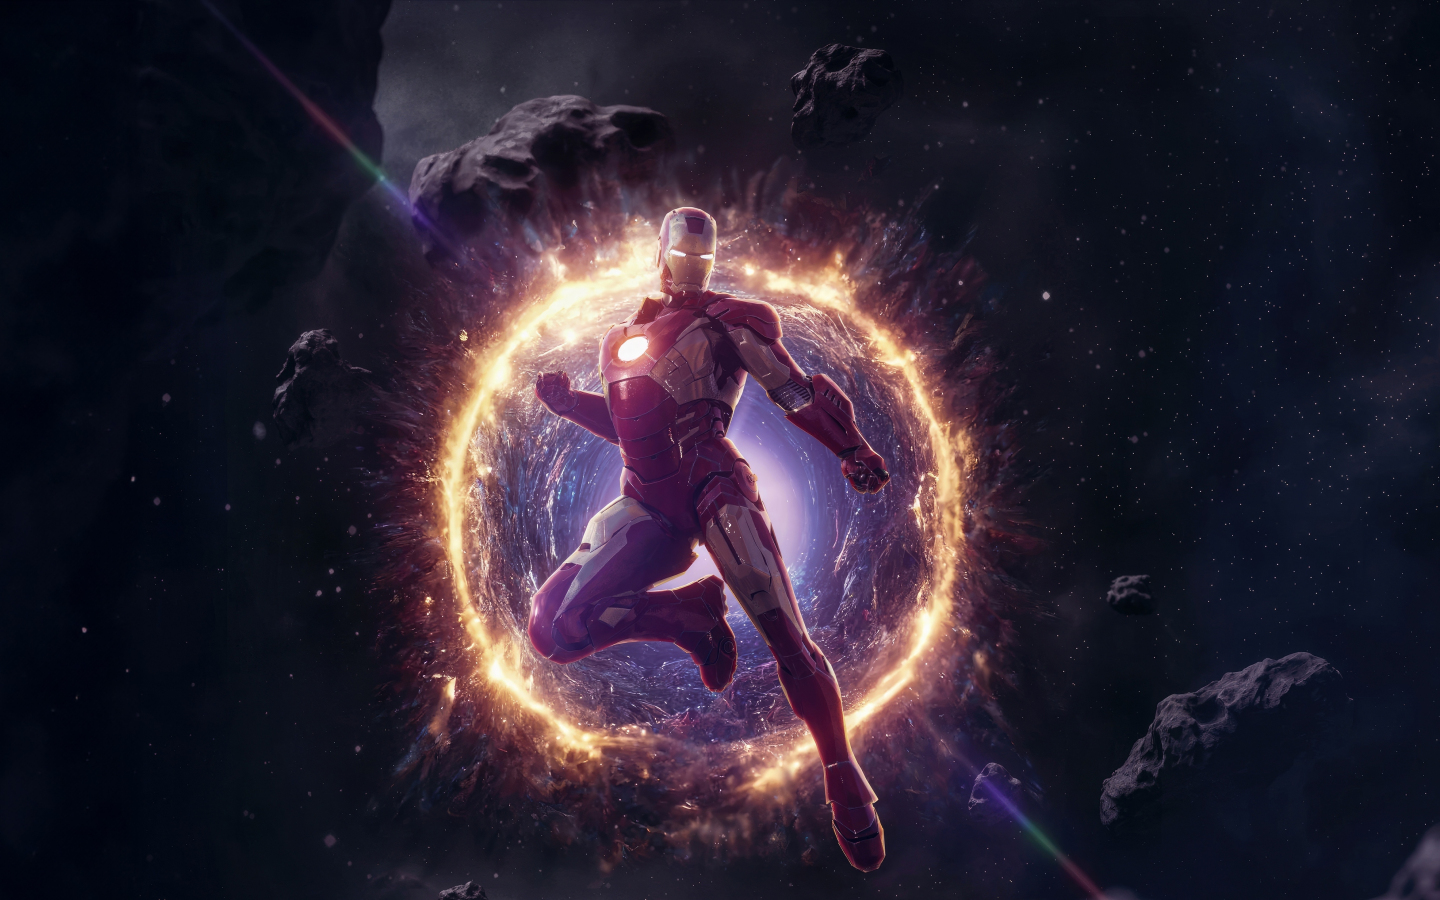 Iron man through the wormhole, space, 1440x900 wallpaper